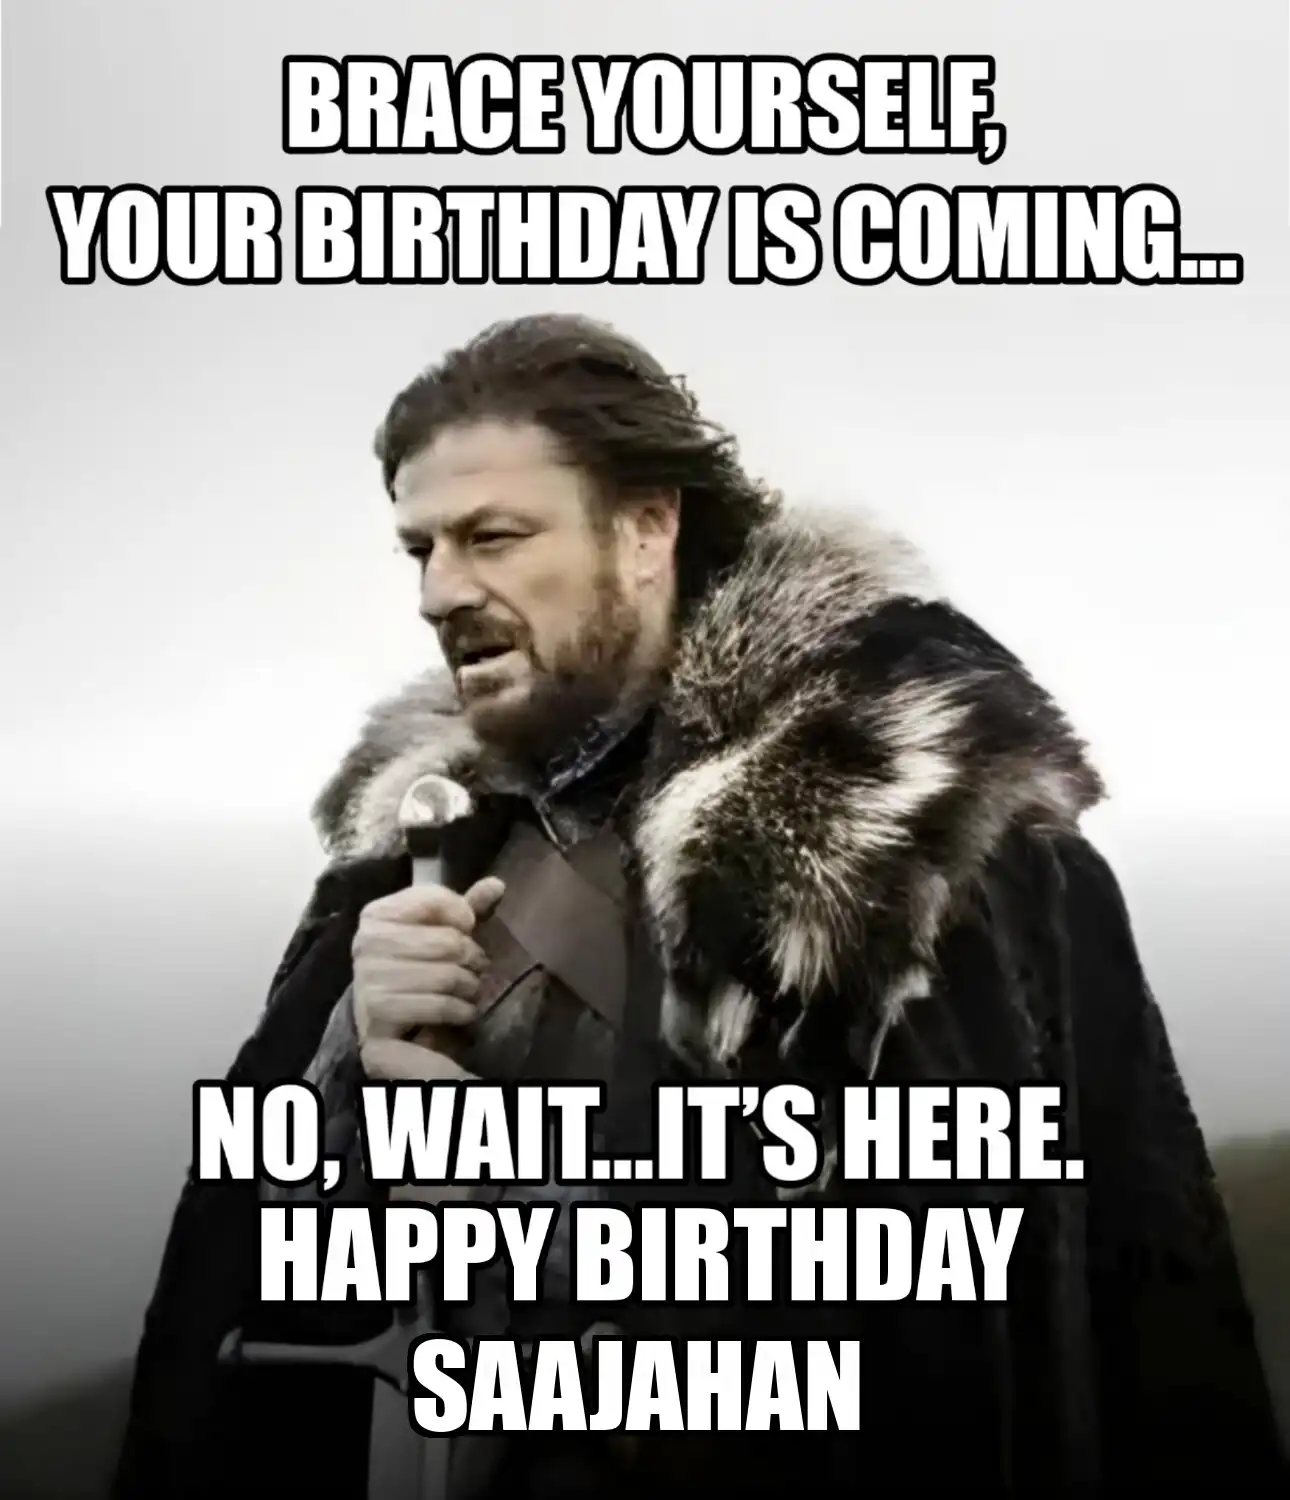 Happy Birthday Saajahan Brace Yourself Your Birthday Is Coming Meme